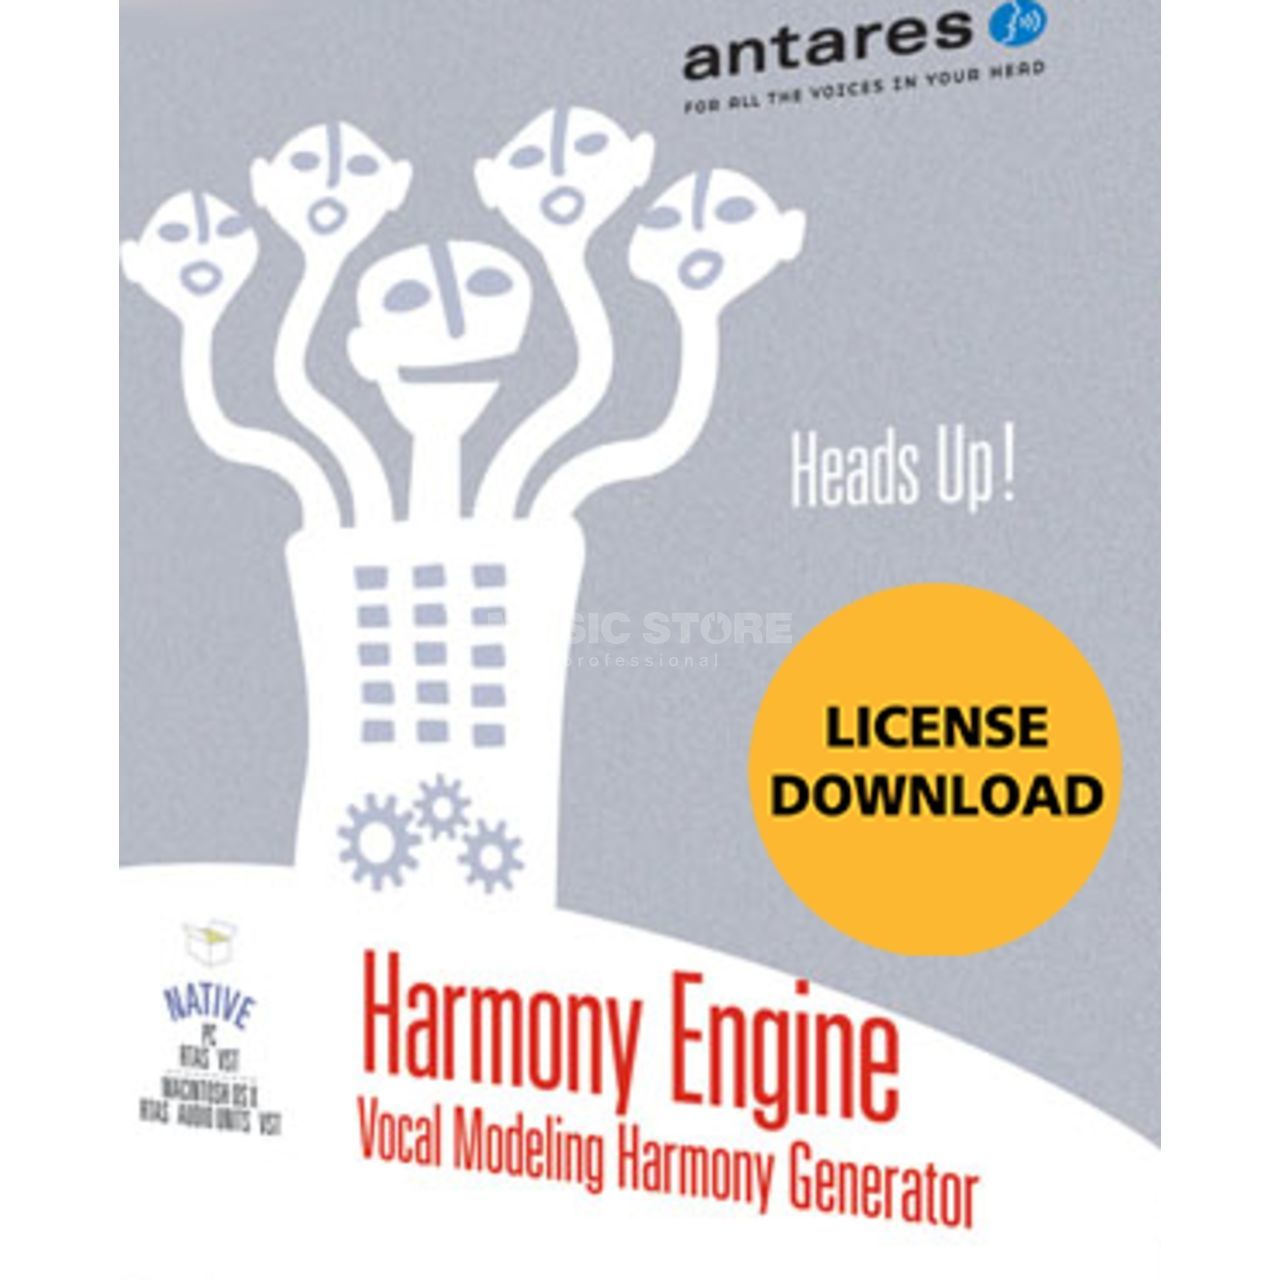 Harmony engine evo vst free download